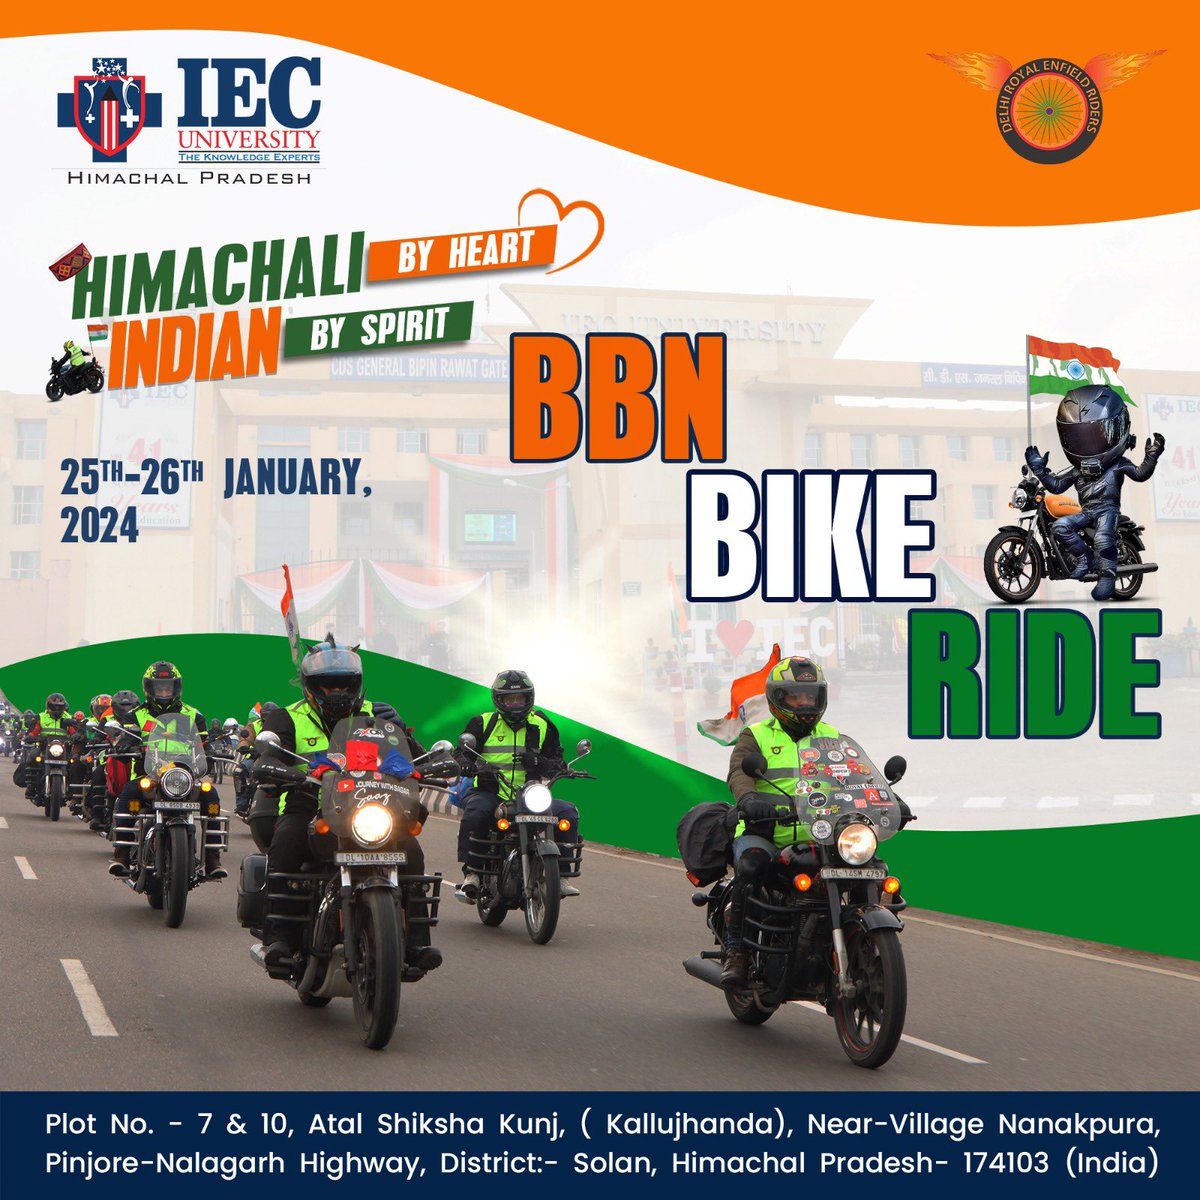 #RepublicDay #india #iecuniversity🏤 #iec2024 #bbn #bikeride #iecbaddi #admissionopen #admissions